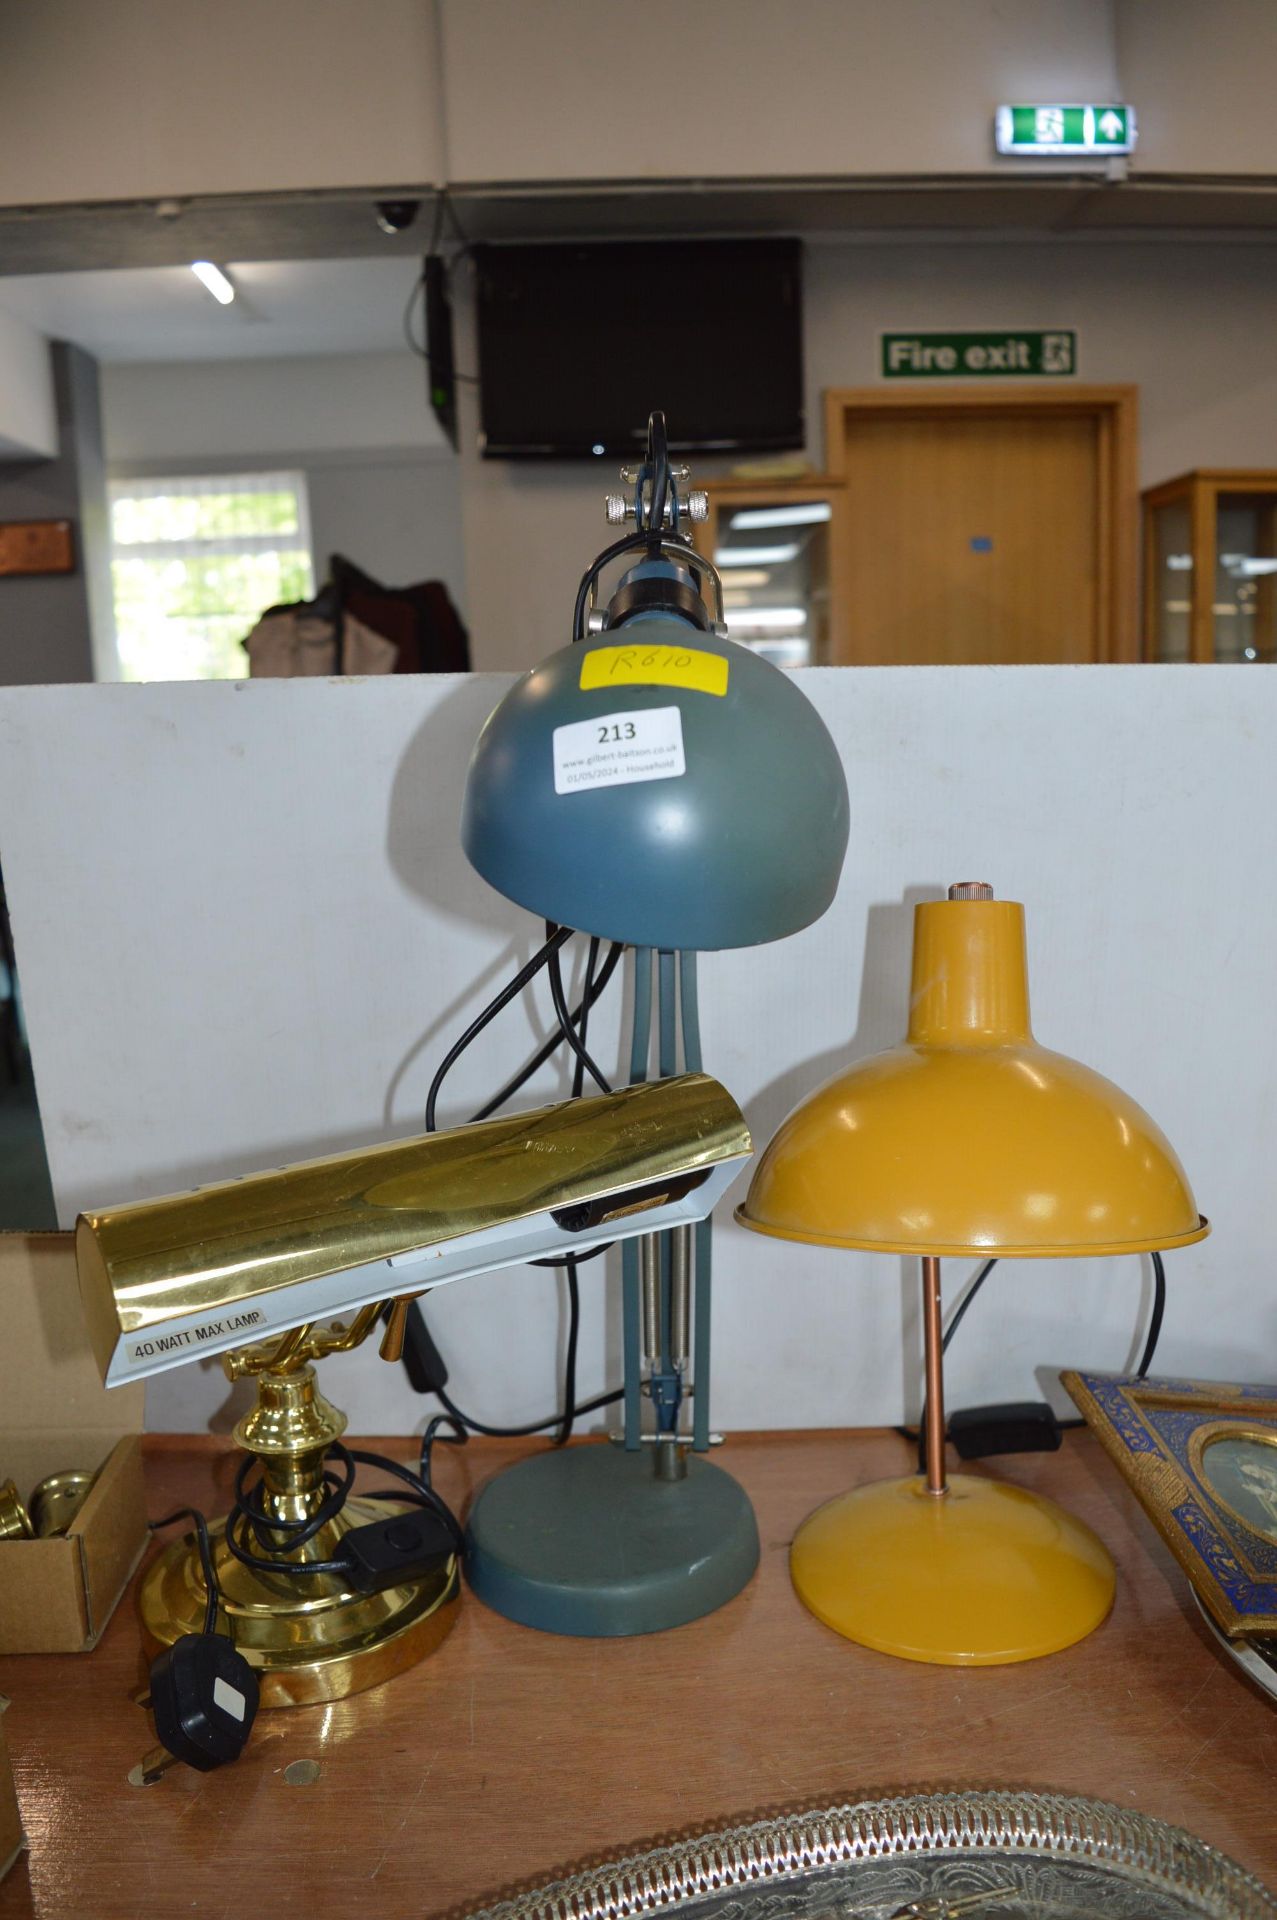 Three Desk Lamps